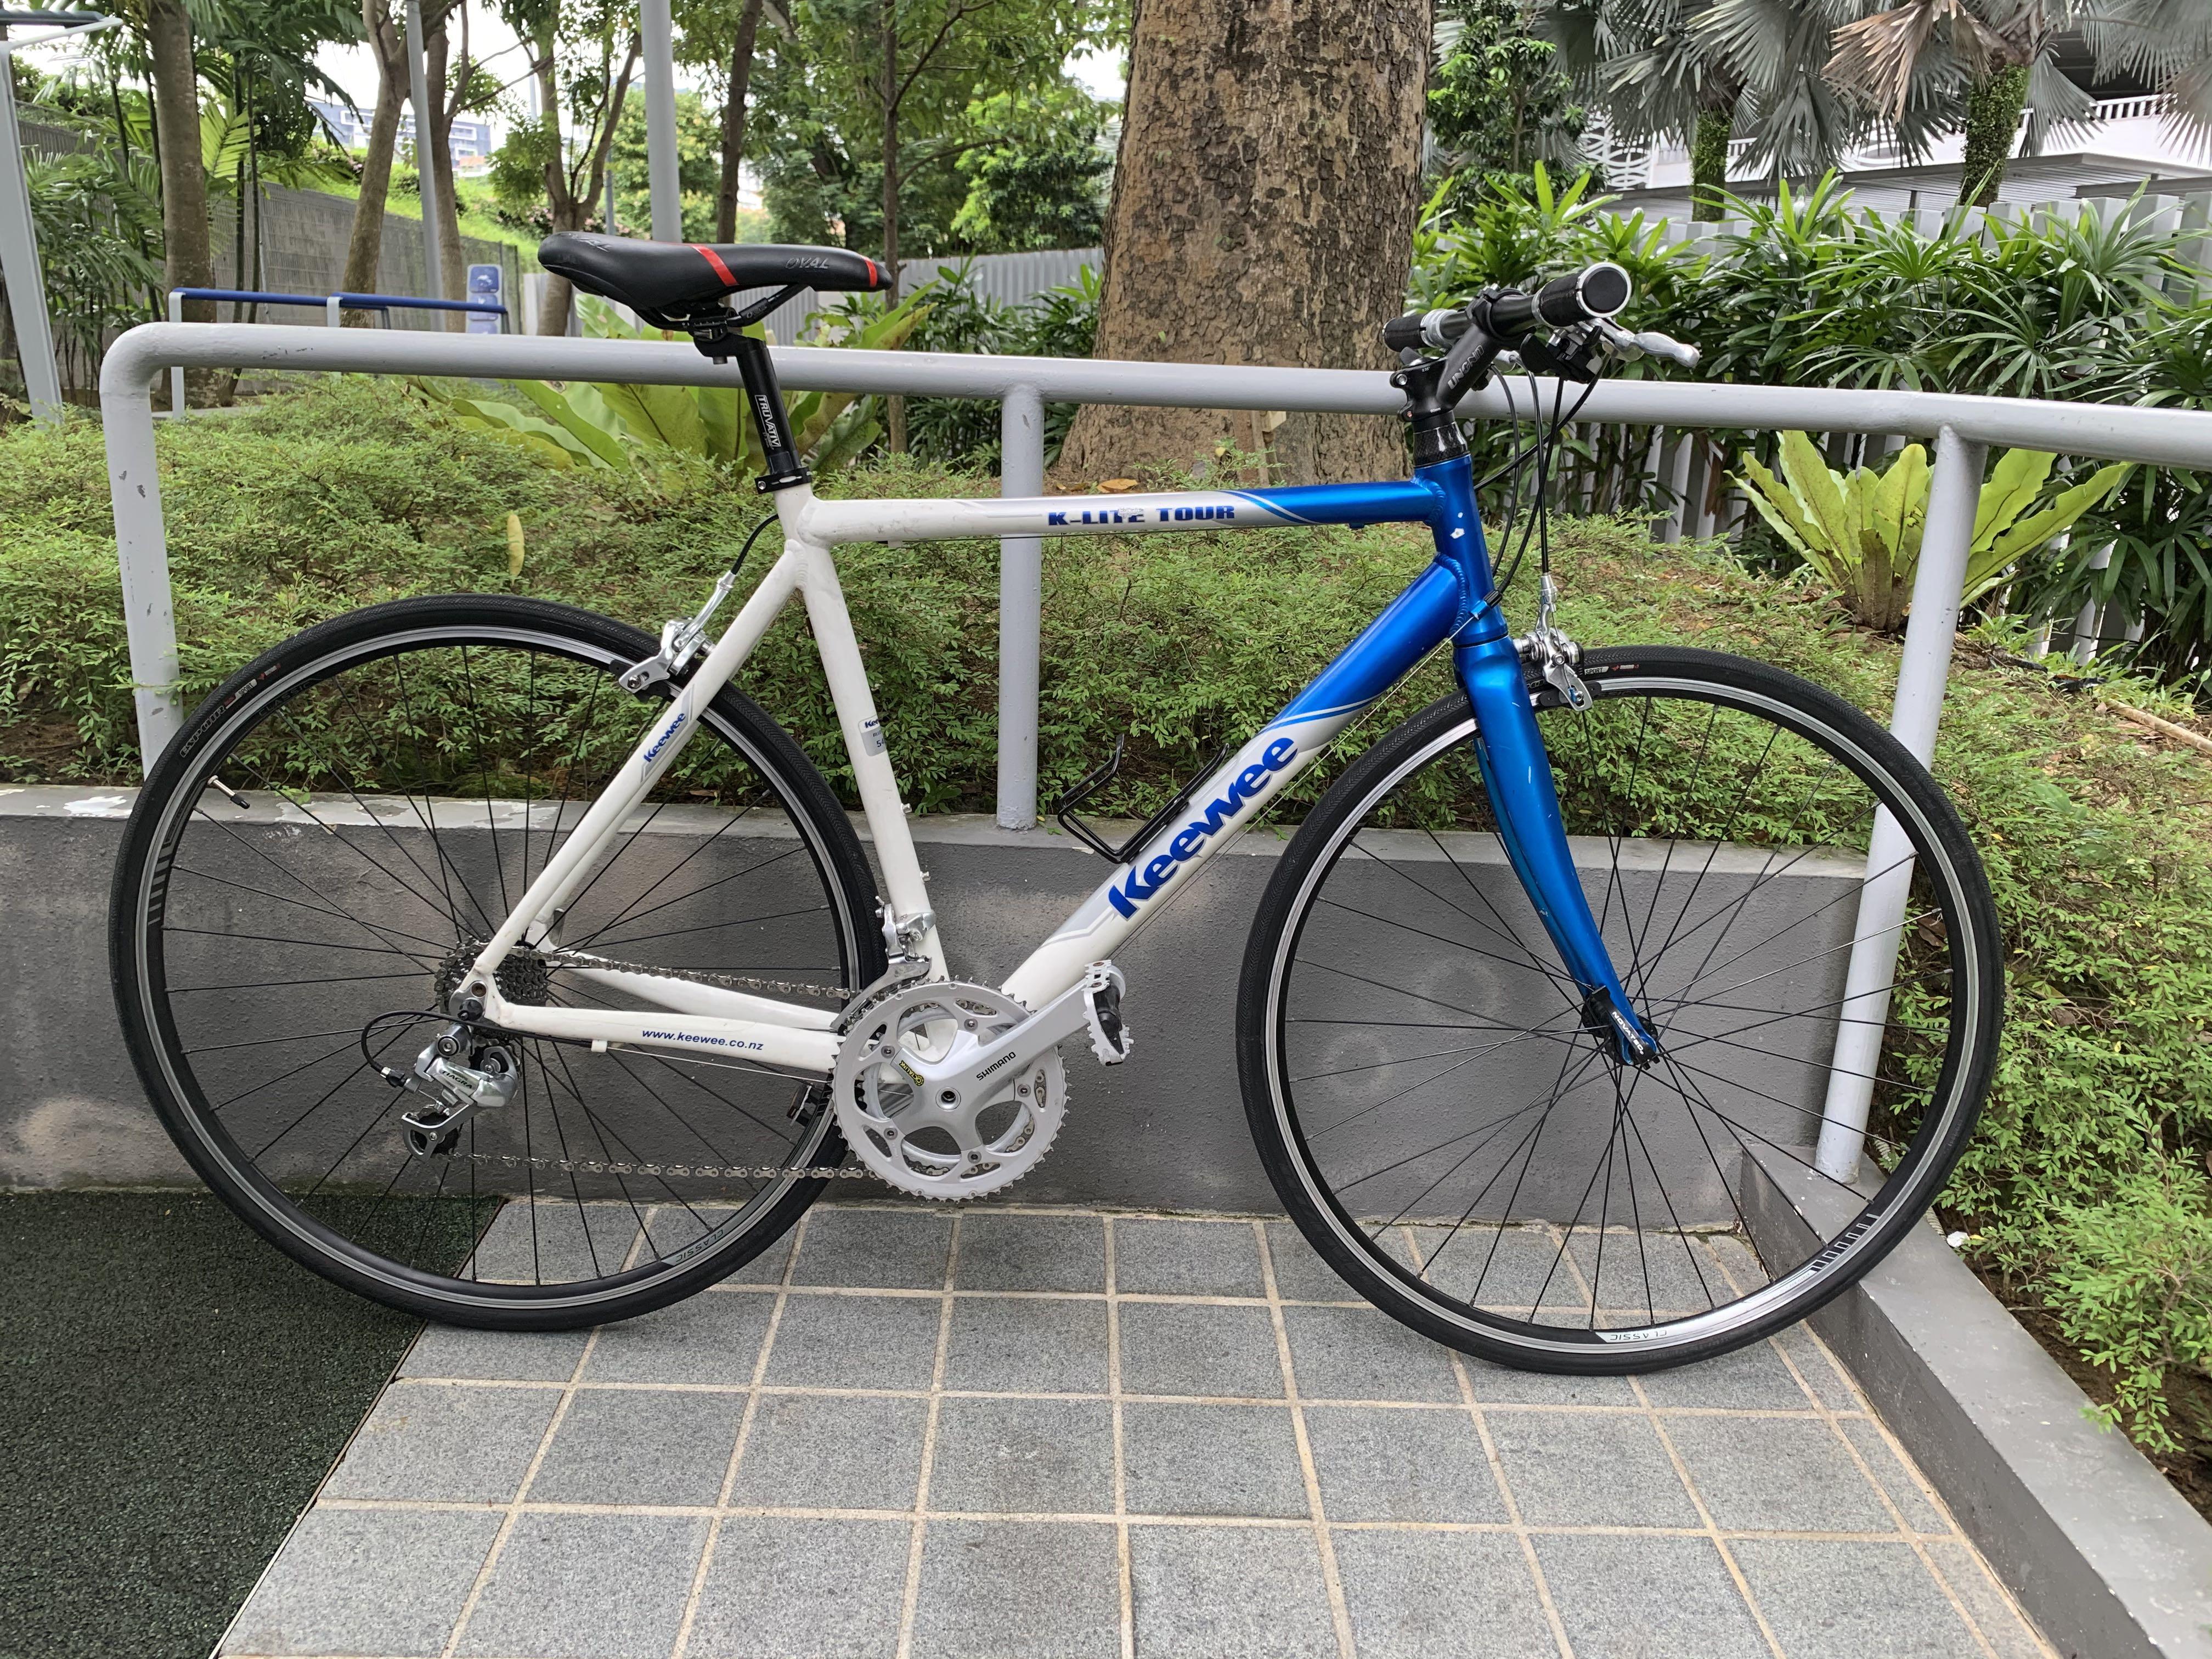 54 cm frame bike